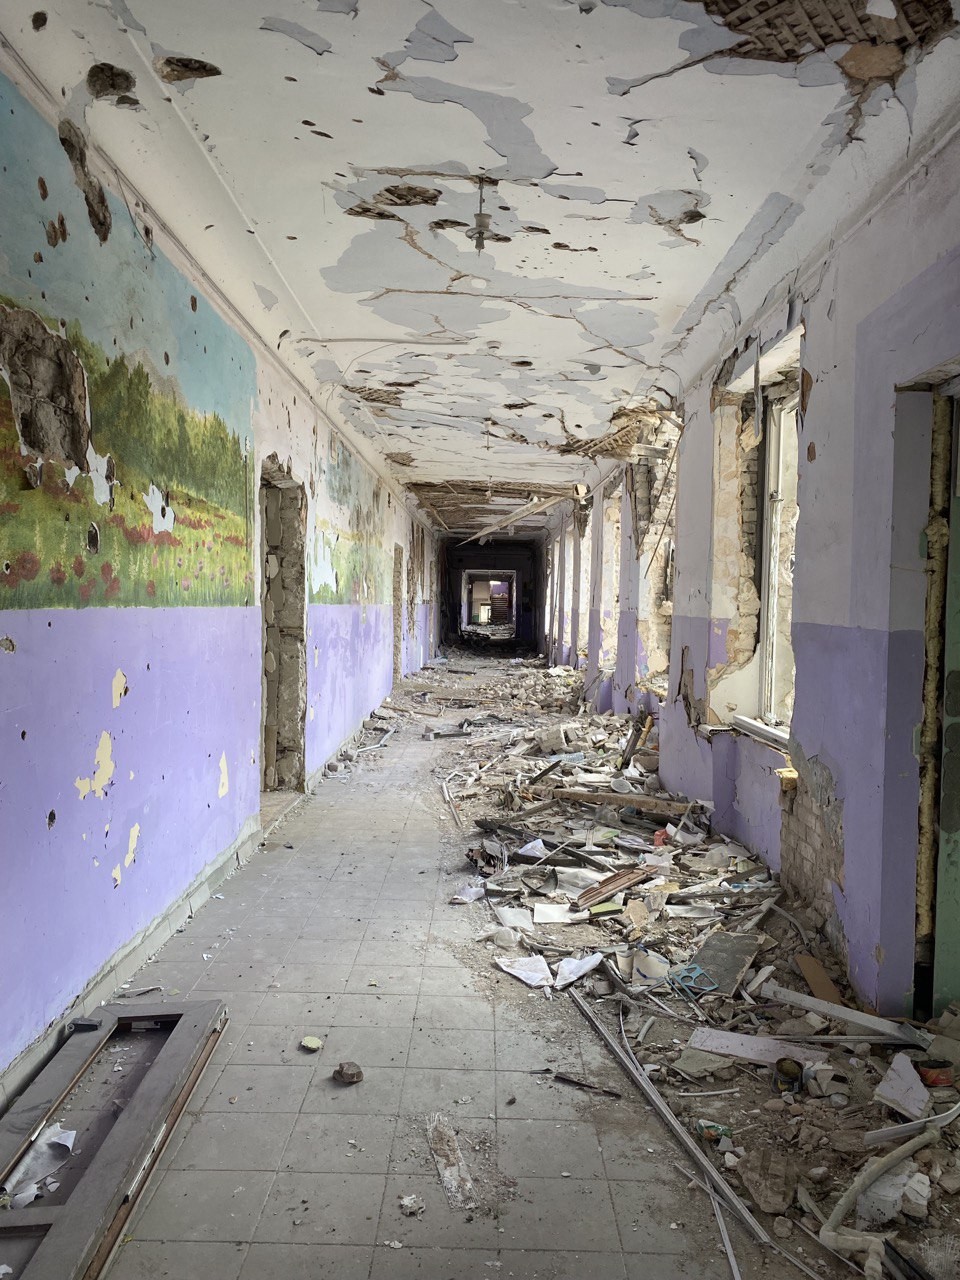 A pintura na parede da escola destruída pela guerra mostra que num passado pouco distante o local era repleto de vida — Foto: Ekaterina Diachkova